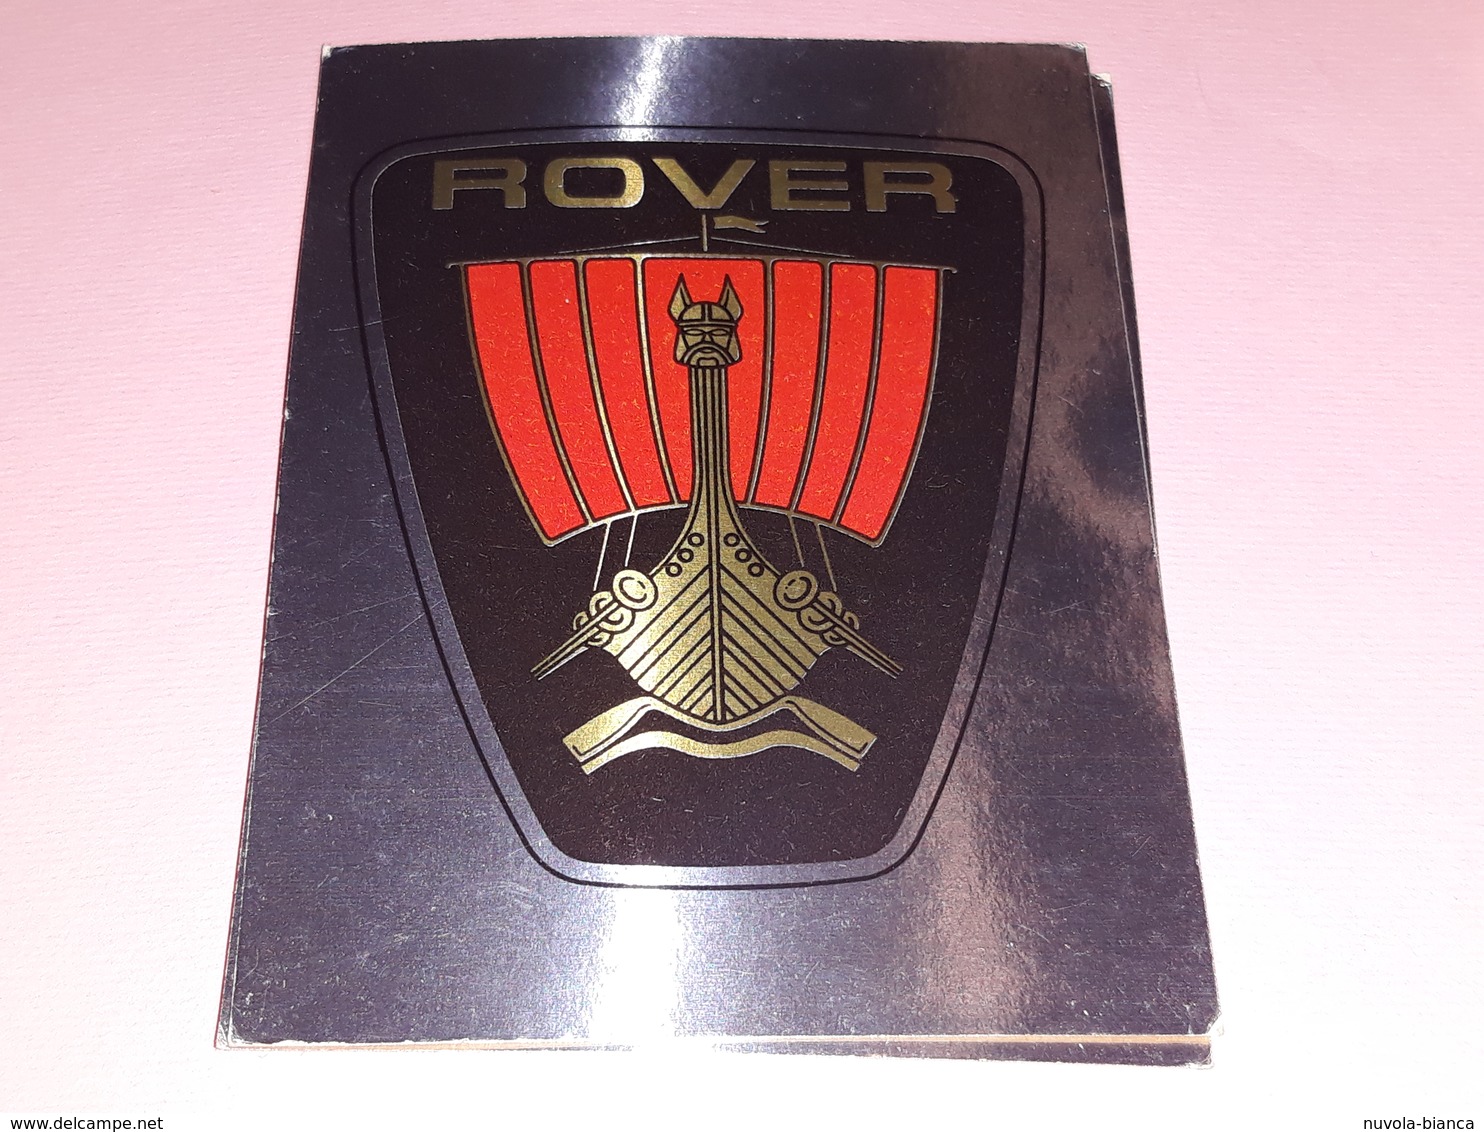 Rover Panini S Stickers Figurina - Italian Edition